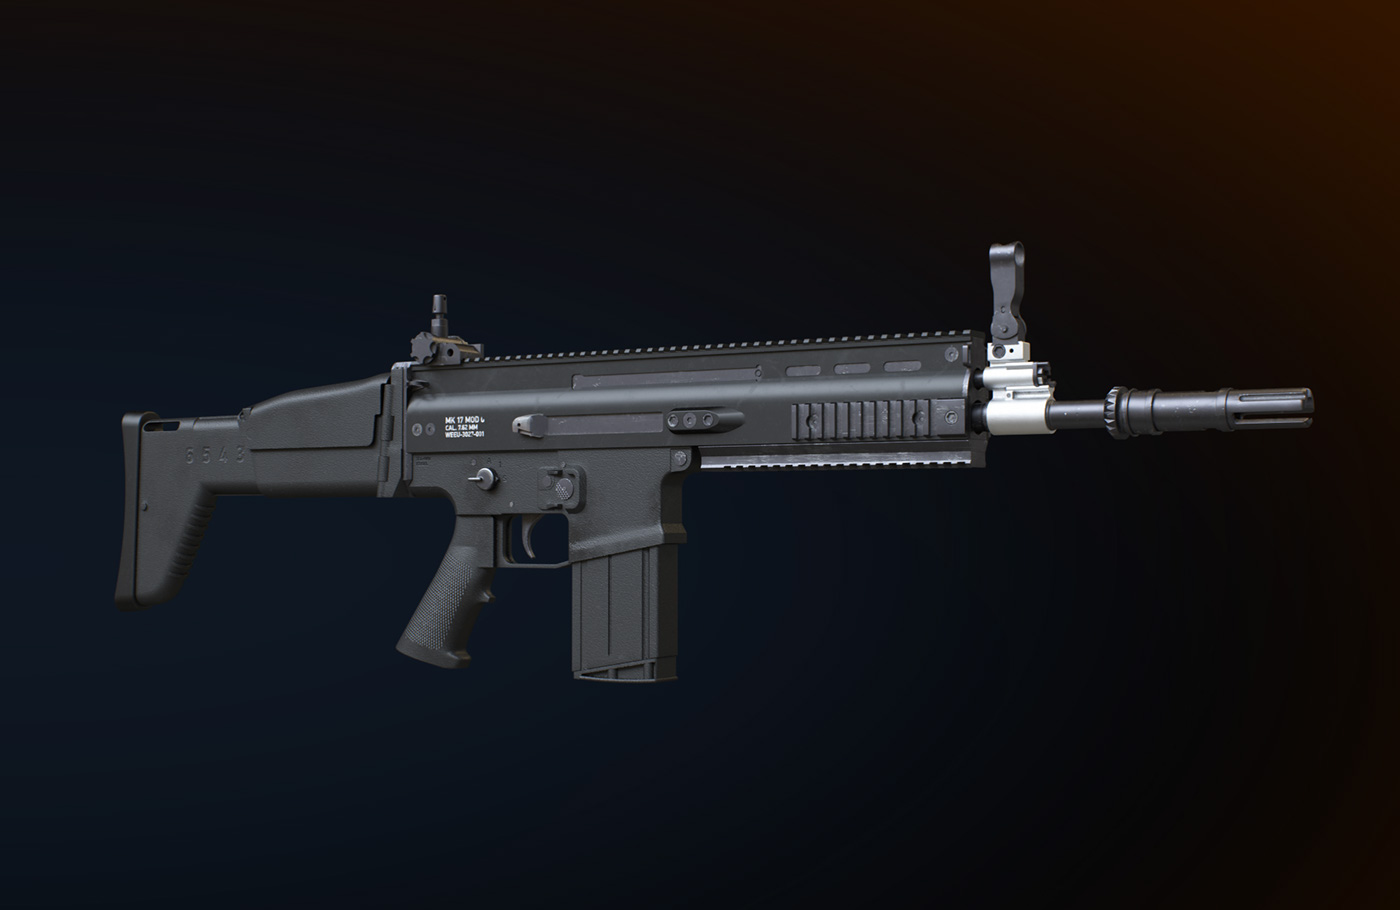 fusion 360 octane cinema 4d Substance Painter modeling texturing rifle Gun SCARE-H